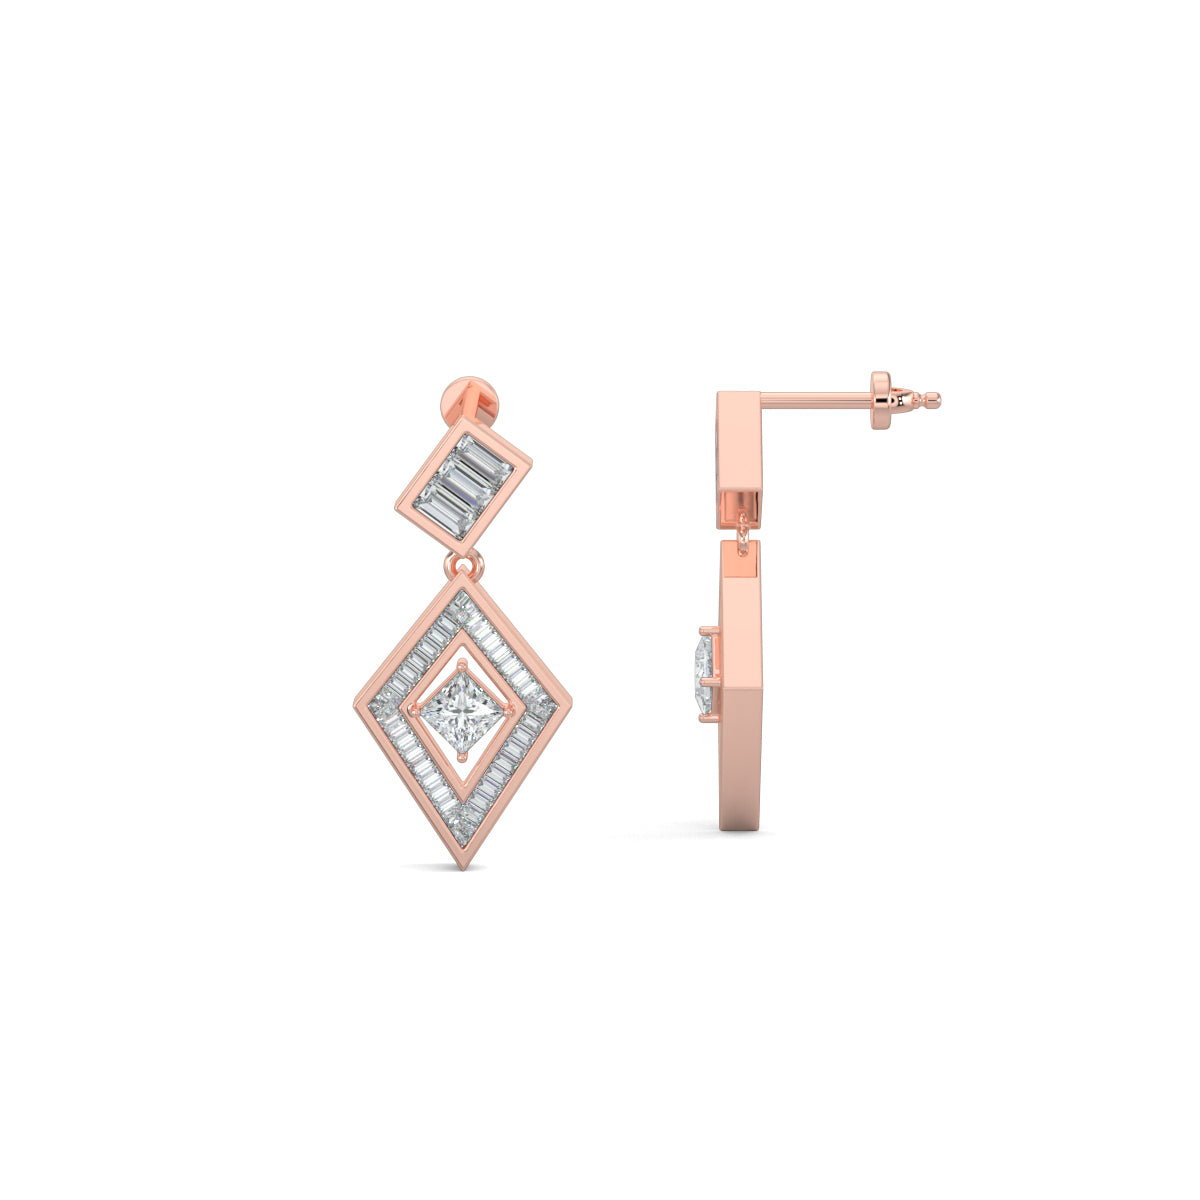 Rose Gold, Diamond Earrings, Natural diamond earrings, Lab-grown diamond earrings, PrismKite Earrings, Mid-length diamond earrings, Baguette-cut diamonds, Princess-cut diamond, Kite-shaped earrings, Modern diamond jewelry, Contemporary earrings, Luxury diamond earrings.